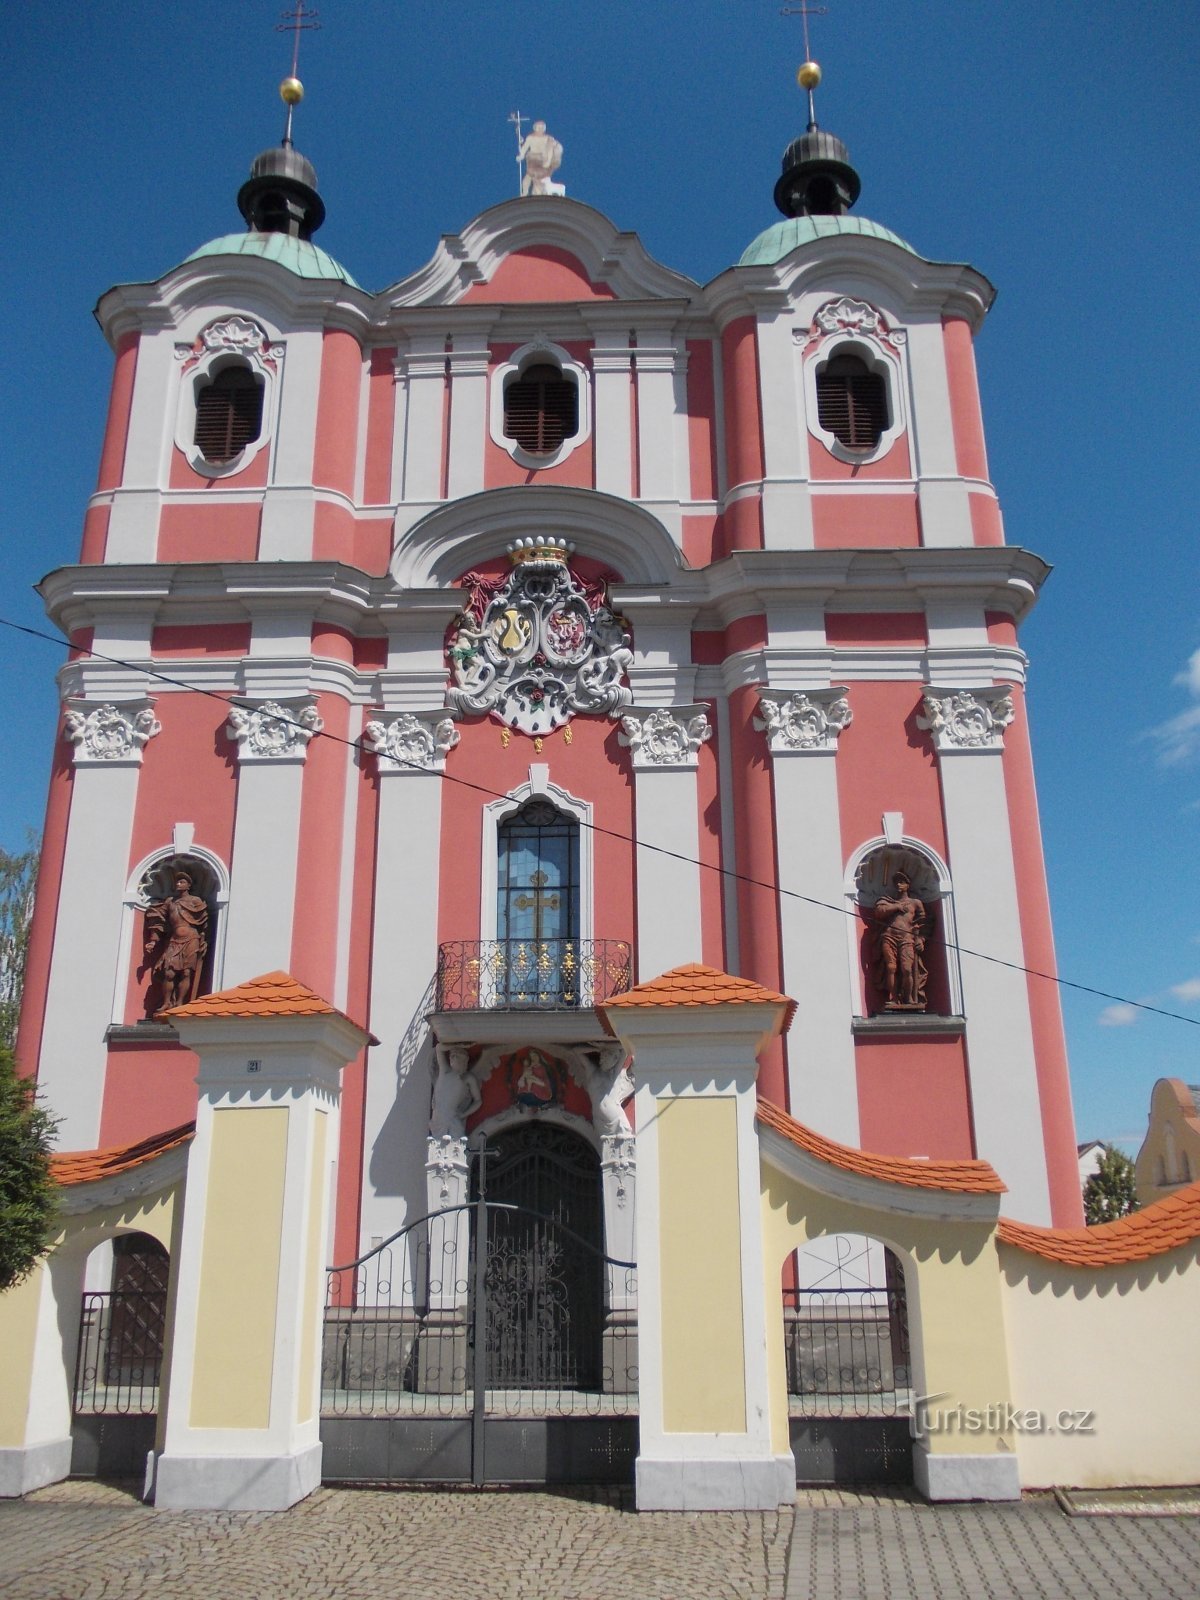 fasada kościoła św. Jan Chrzciciel